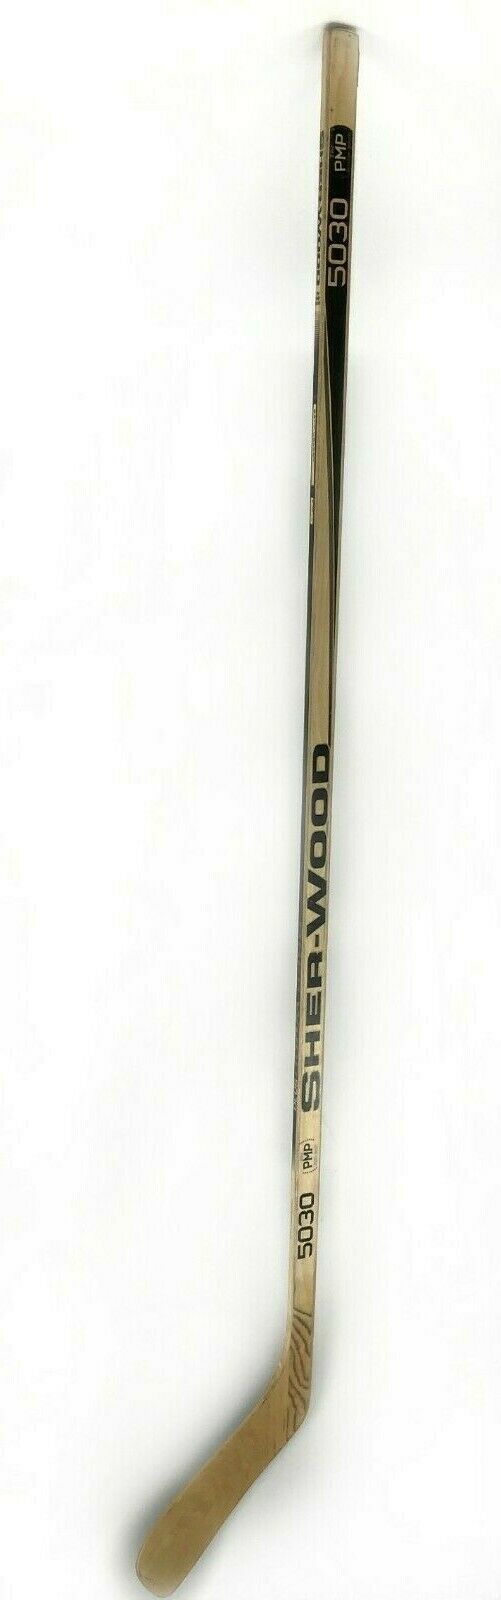 Sher-Wood PMP 5030 JR PP77 - 70 Flex Feather-Lite Wood Hockey Stick RH #Z64